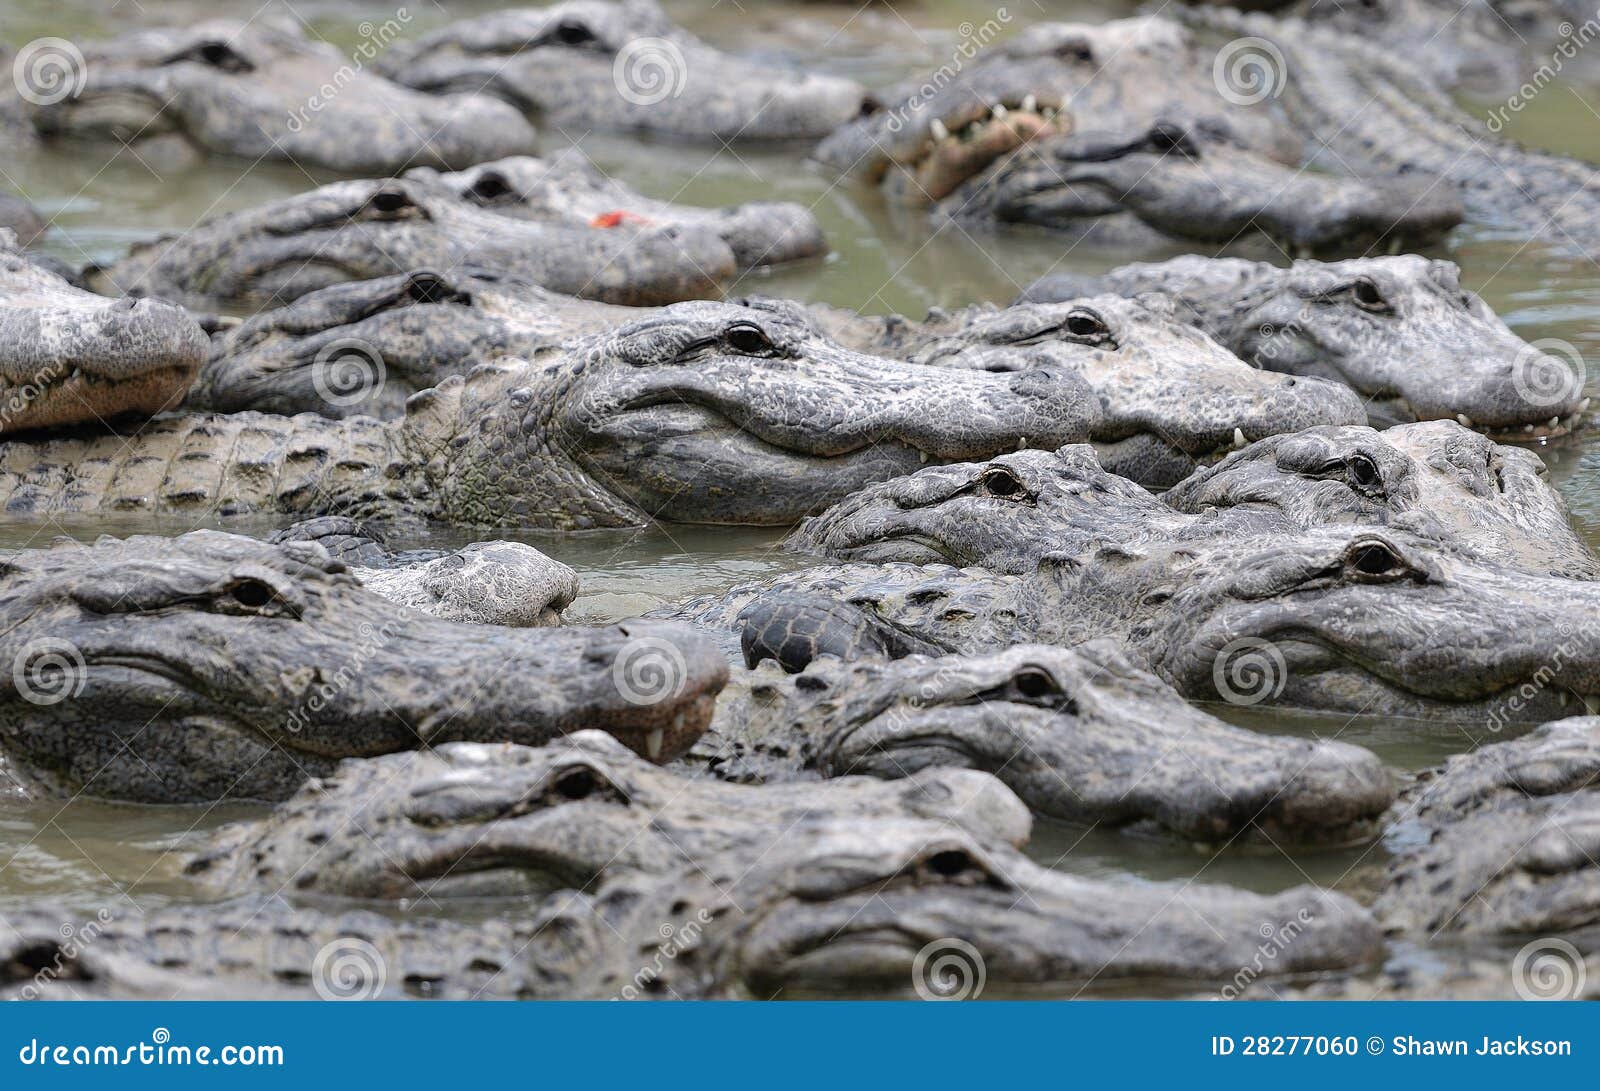 Group Of Alligators 112